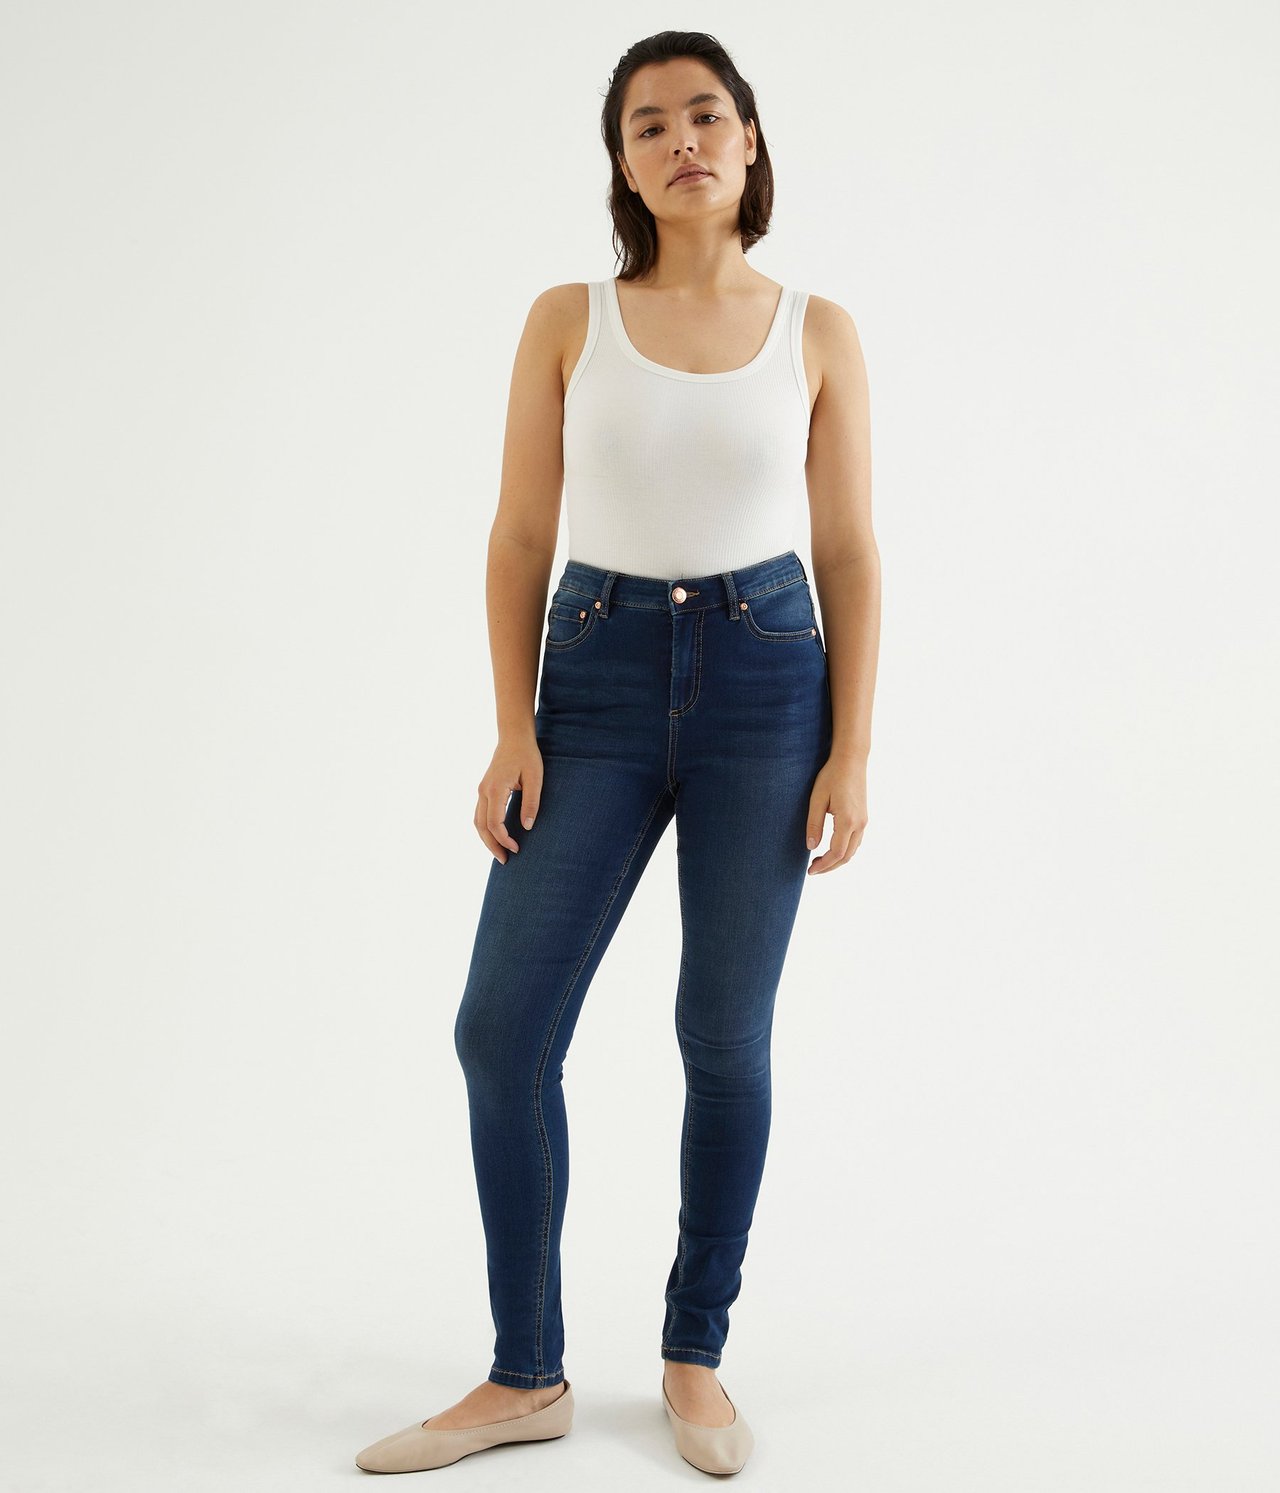 Super Slim Jeans High Waist - Tumma denimi - 174cm / Storlek: 38 - 1